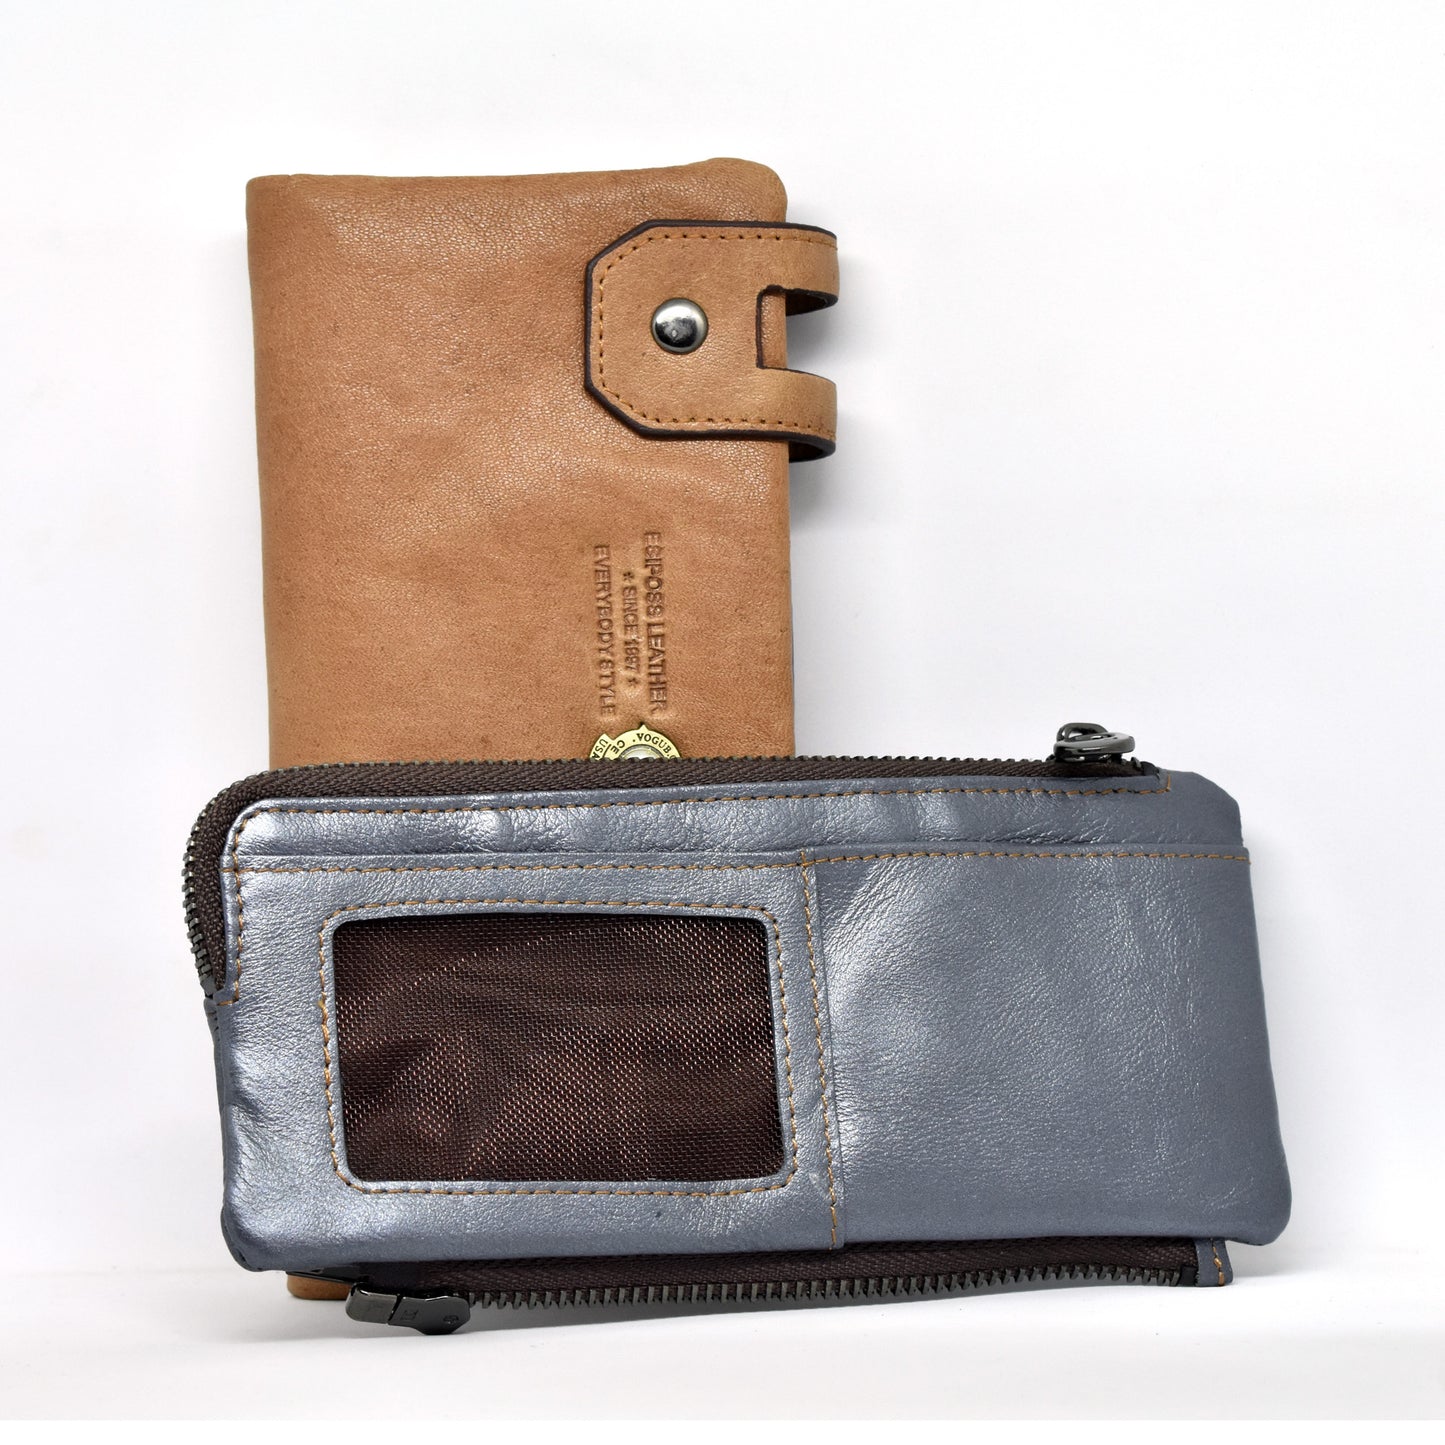 Original Esiposs Leather Long Wallet | Mobile Size Wallet | EPS Long 07